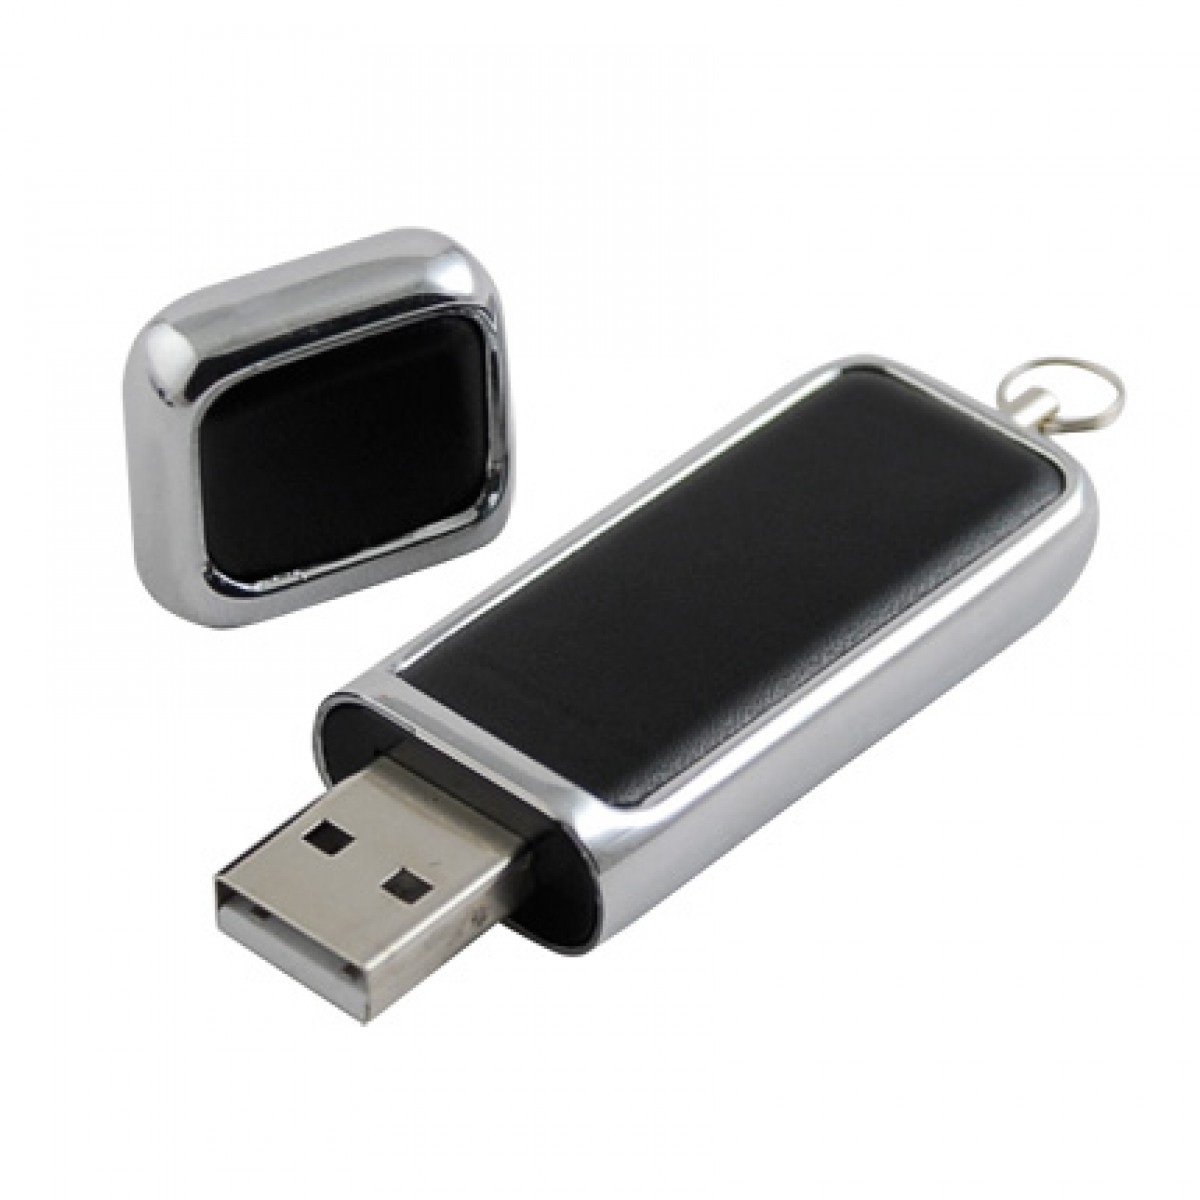 Цены сколько стоят флешки. Флешка Freecom USB Card 16gb. Флешки юсб маленькие 16 ГБ. Флэшка 3.0 металл Kingston. Маленькая флешка USB 32гб.